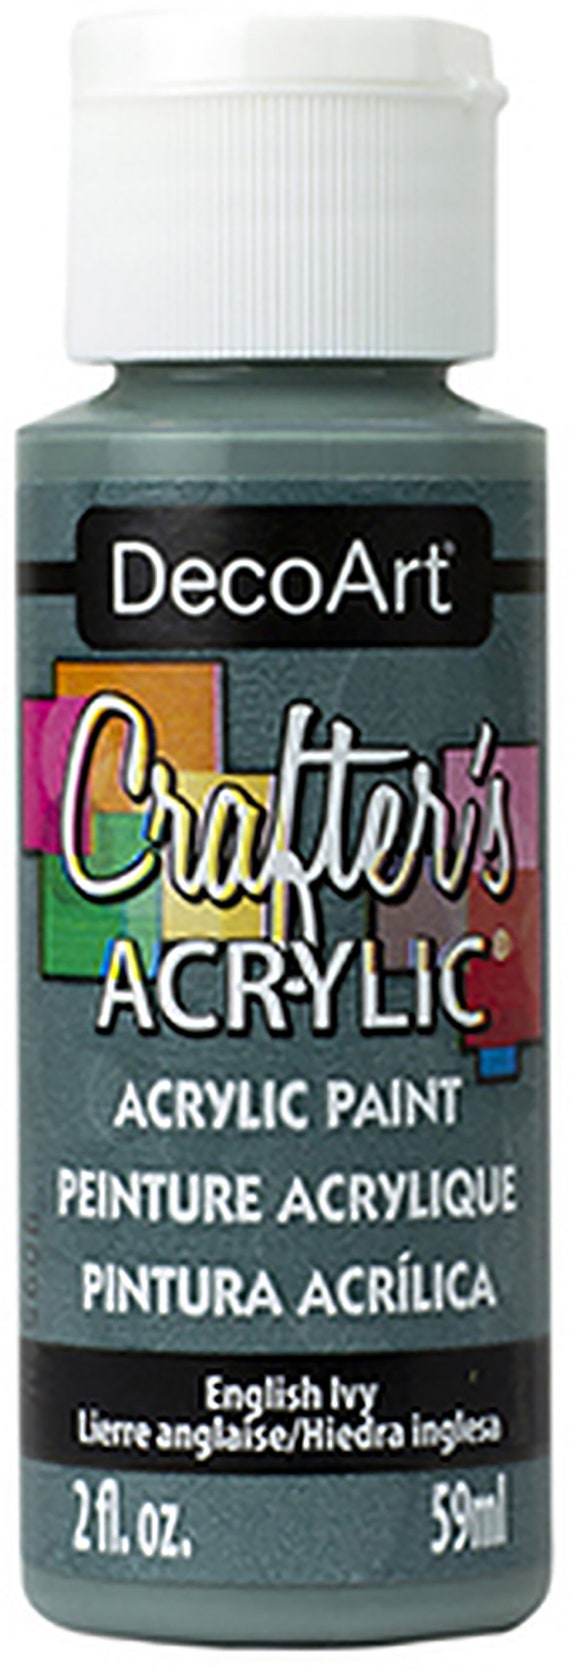 Decoart Dazzling Metallics Acrylic Paint 59ml 24 Colours 